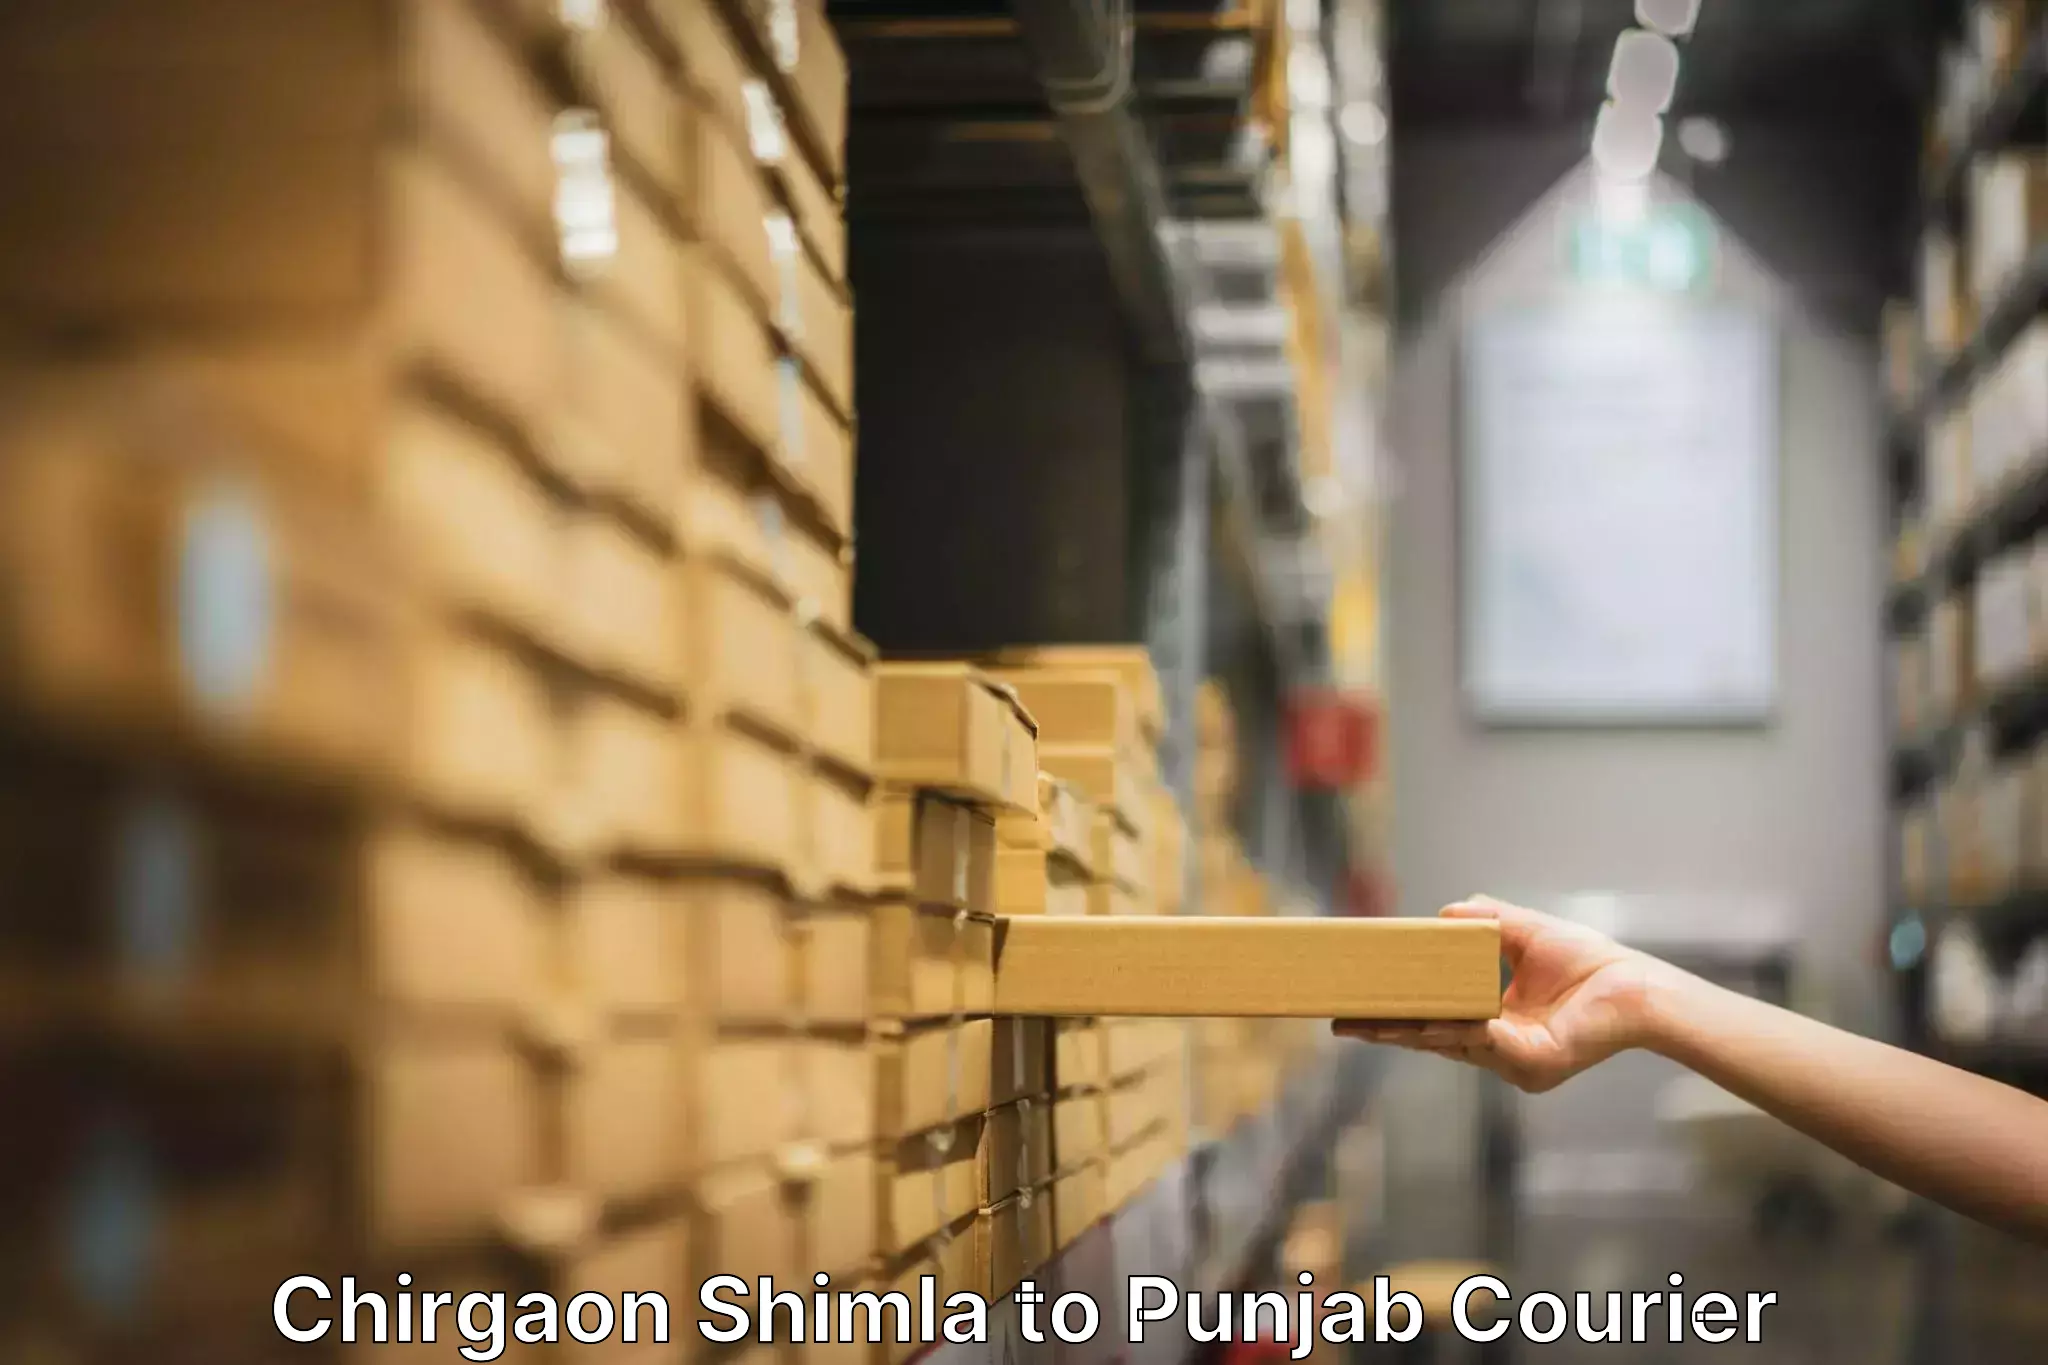 Professional furniture movers Chirgaon Shimla to Mohali